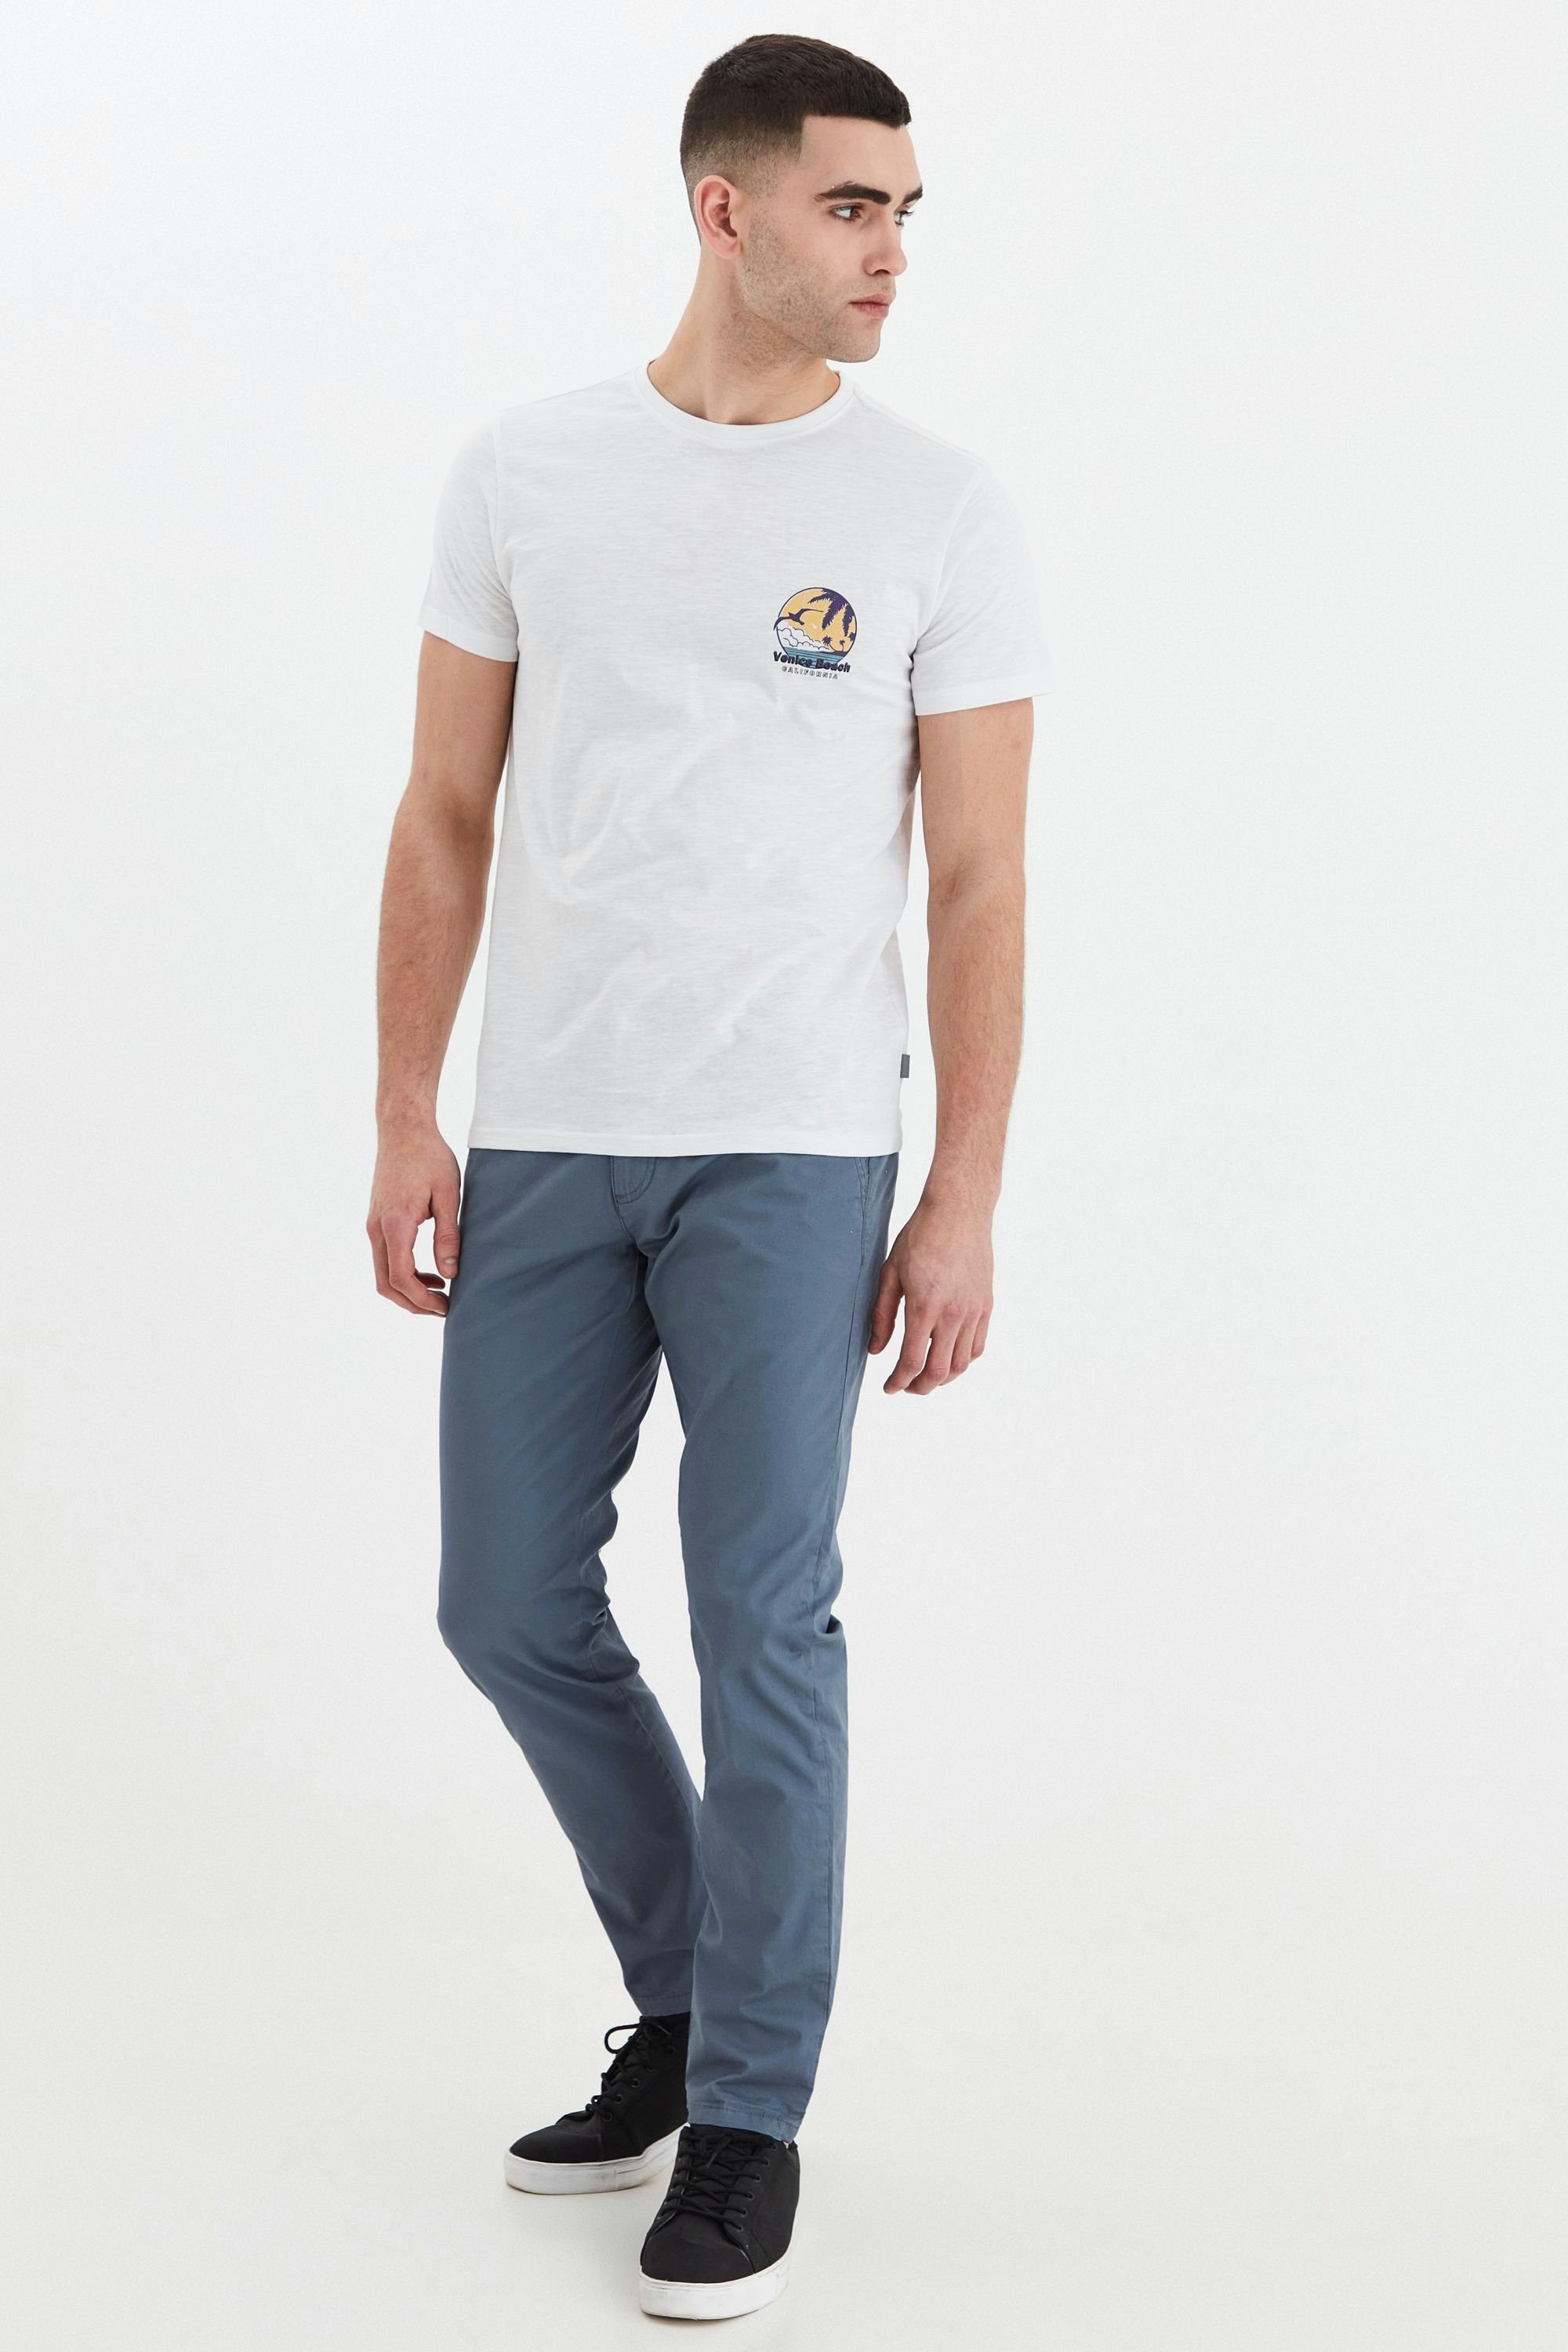 mit Print-Shirt Print White (110601) SDEmmo !Solid T-Shirt